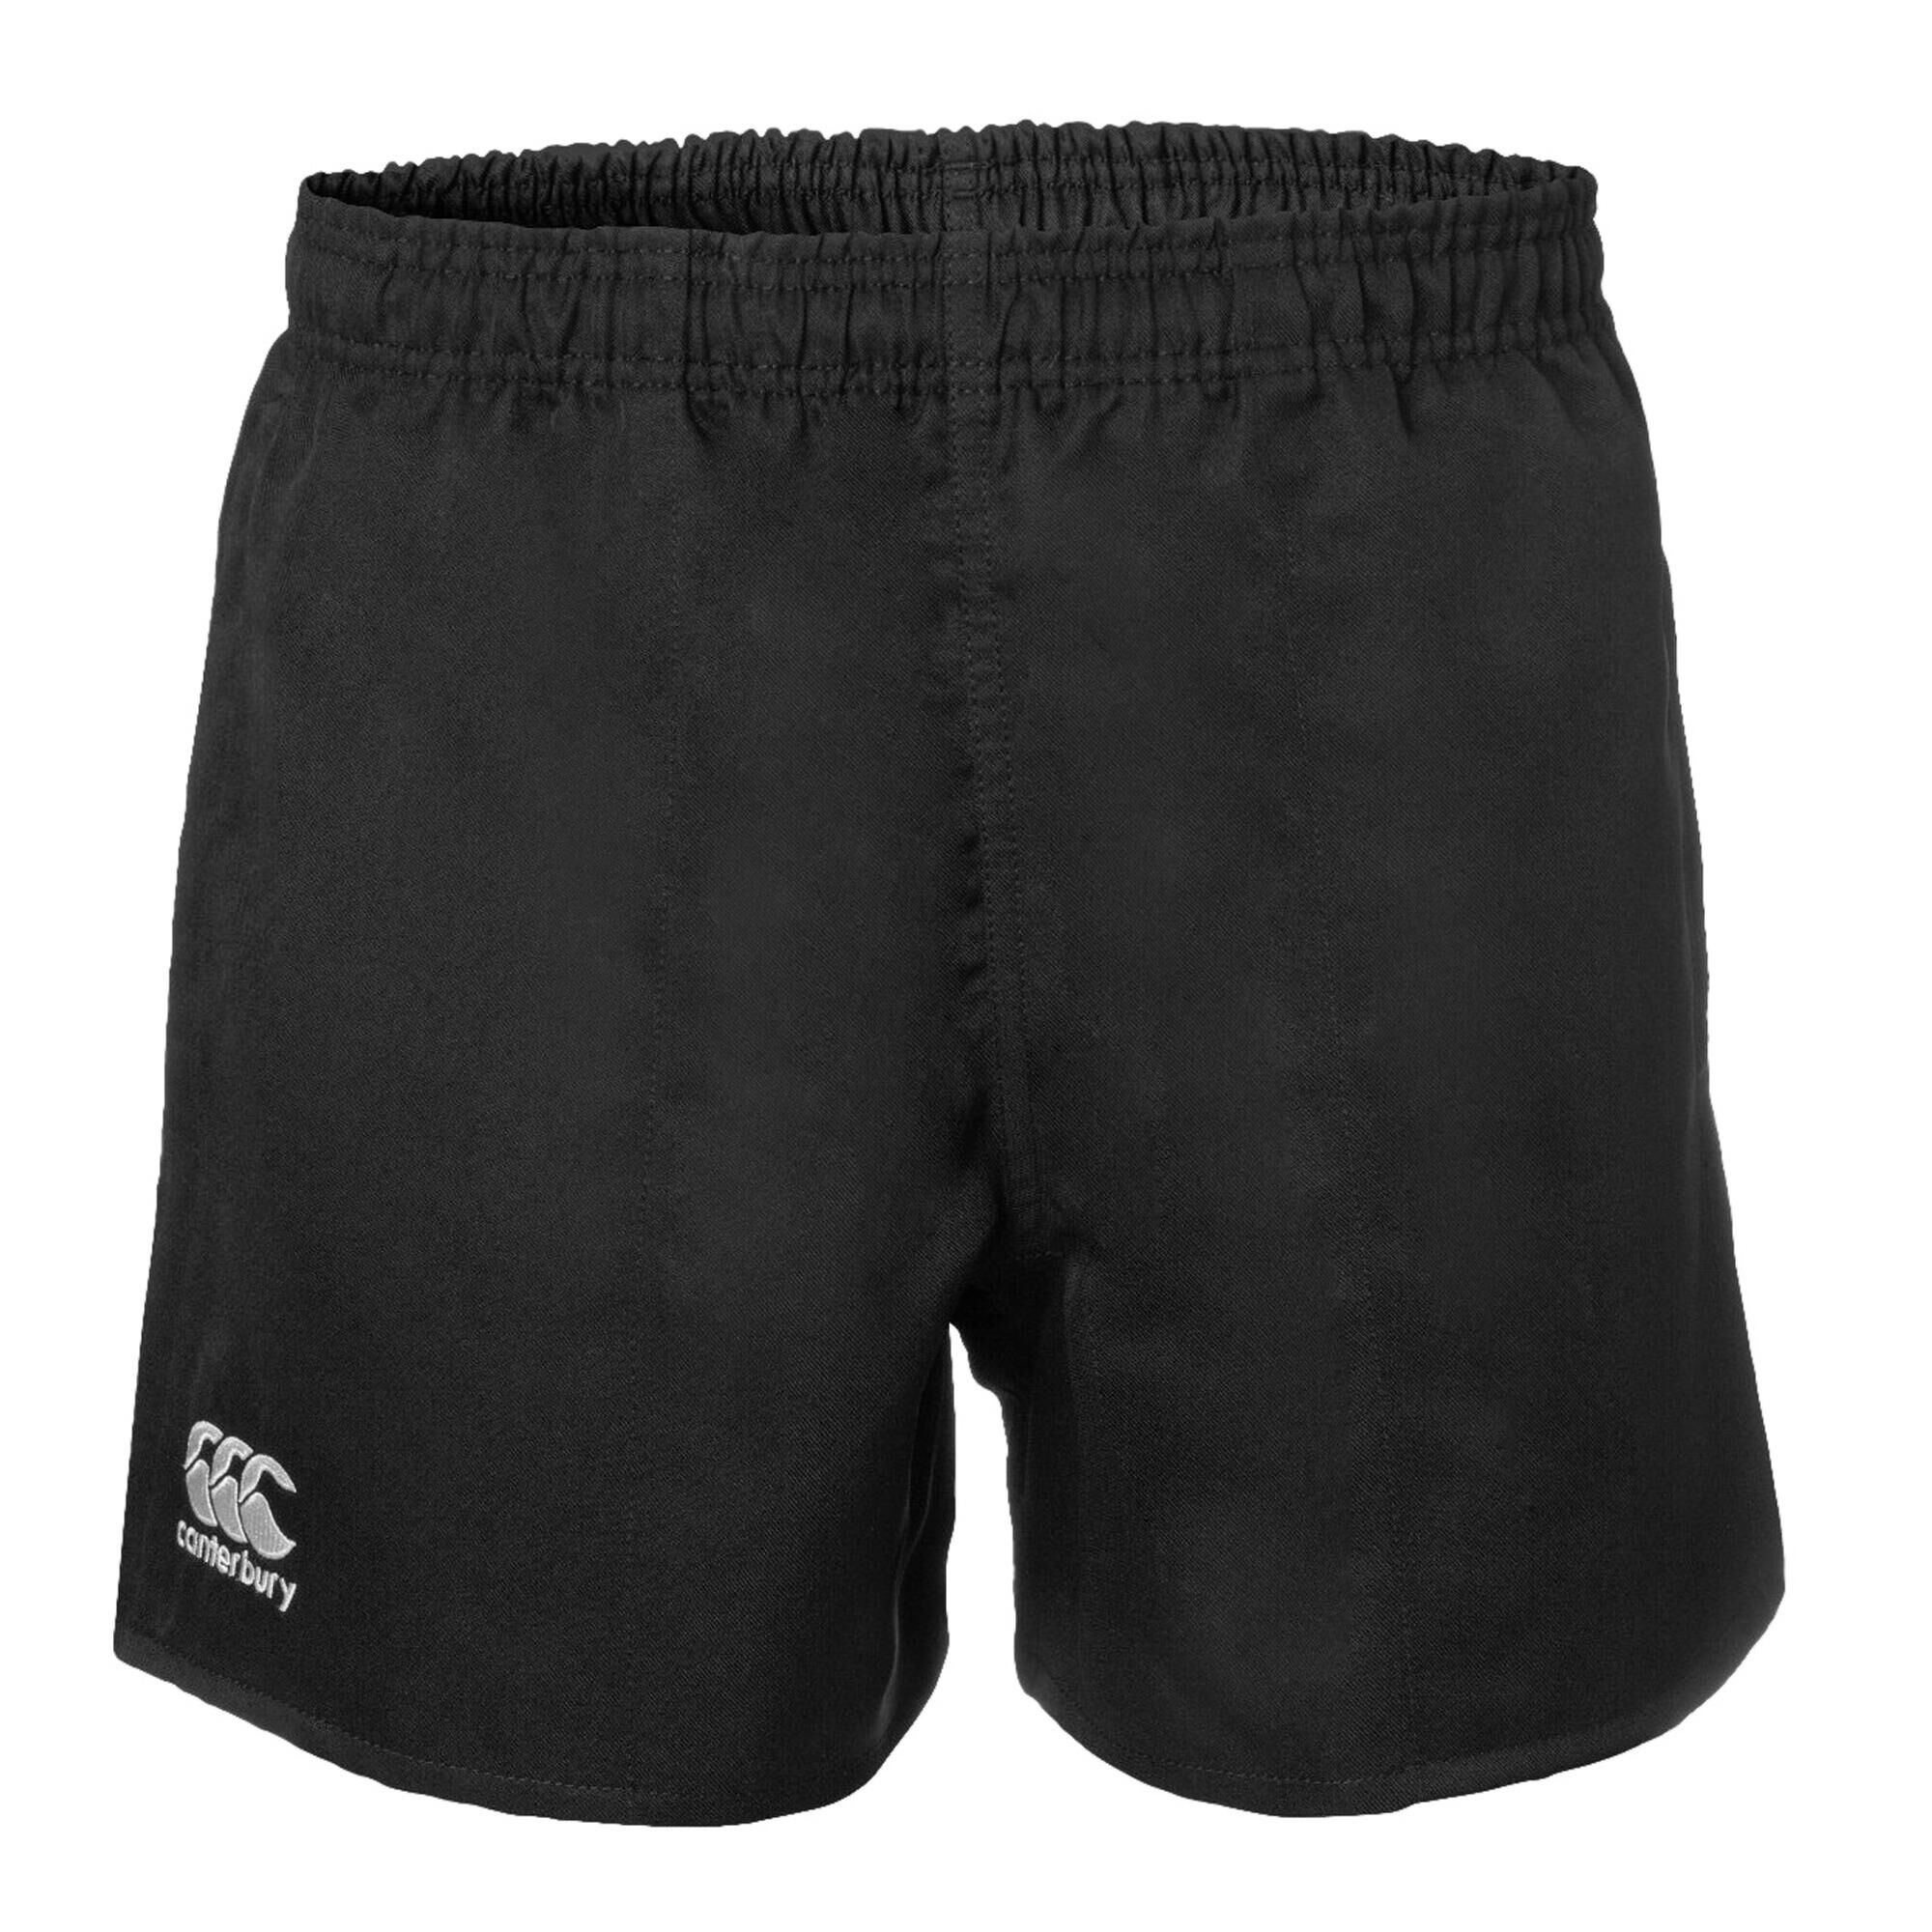 CANTERBURY Mens Professional Elasticated Sports Shorts (Black)